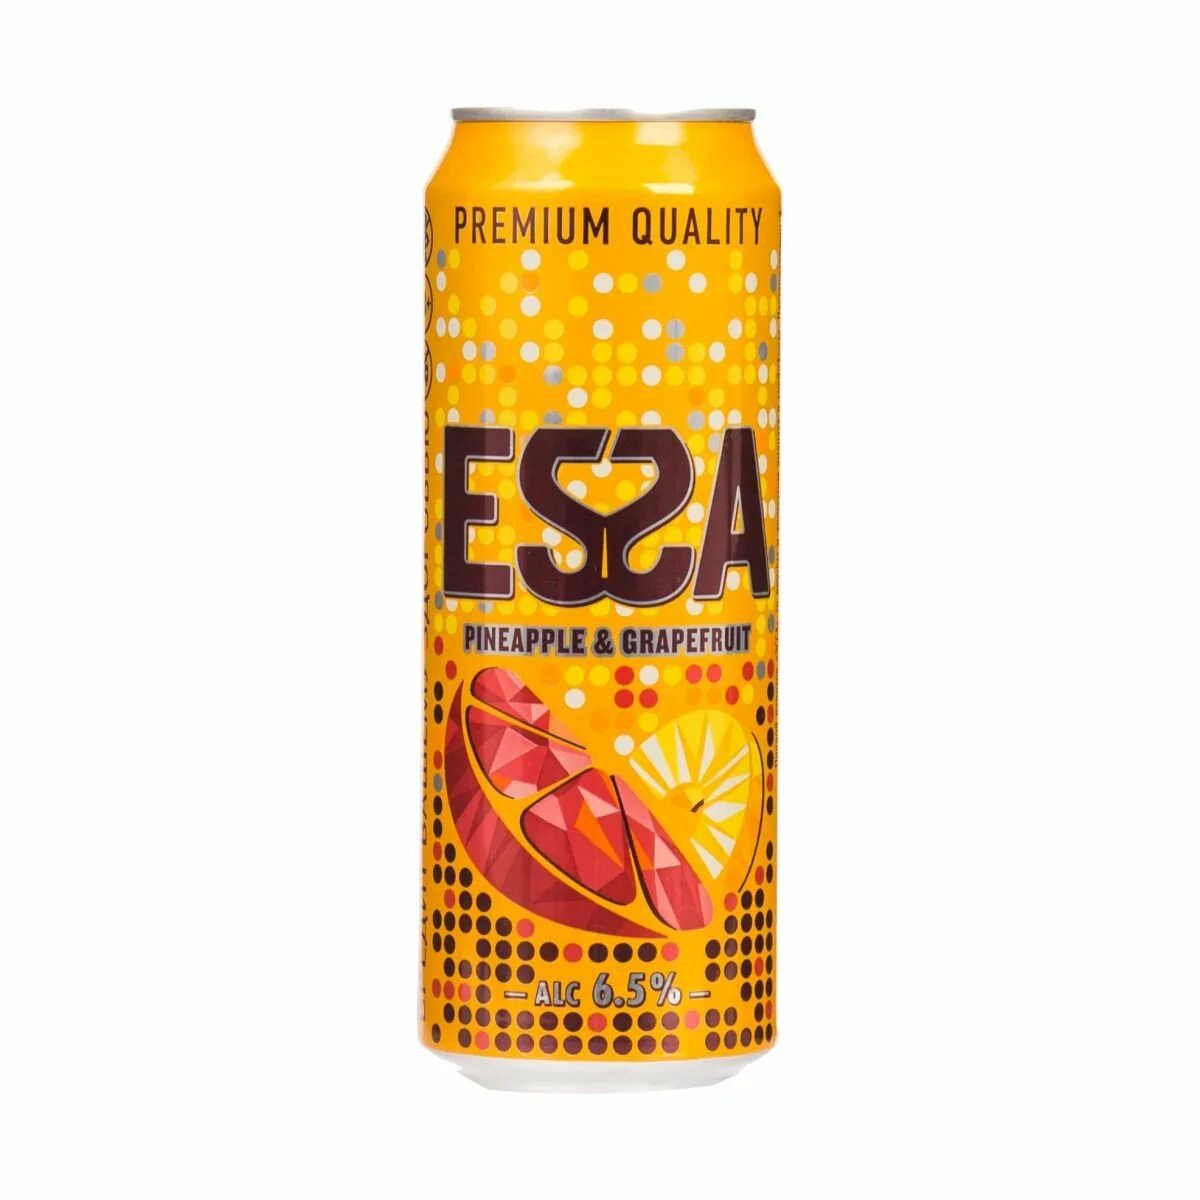 Пивной напиток Эсса ананас/грейпфрут 6,5% 0,45л ж/б. Напиток пивной Эсса 0.45 грейпфрут. Пивной напиток Эсса ананас и грейпфрут б/а 0,45л ж/б. Напиток пивной Эсса 0,45л ж/б. Эсса дыня